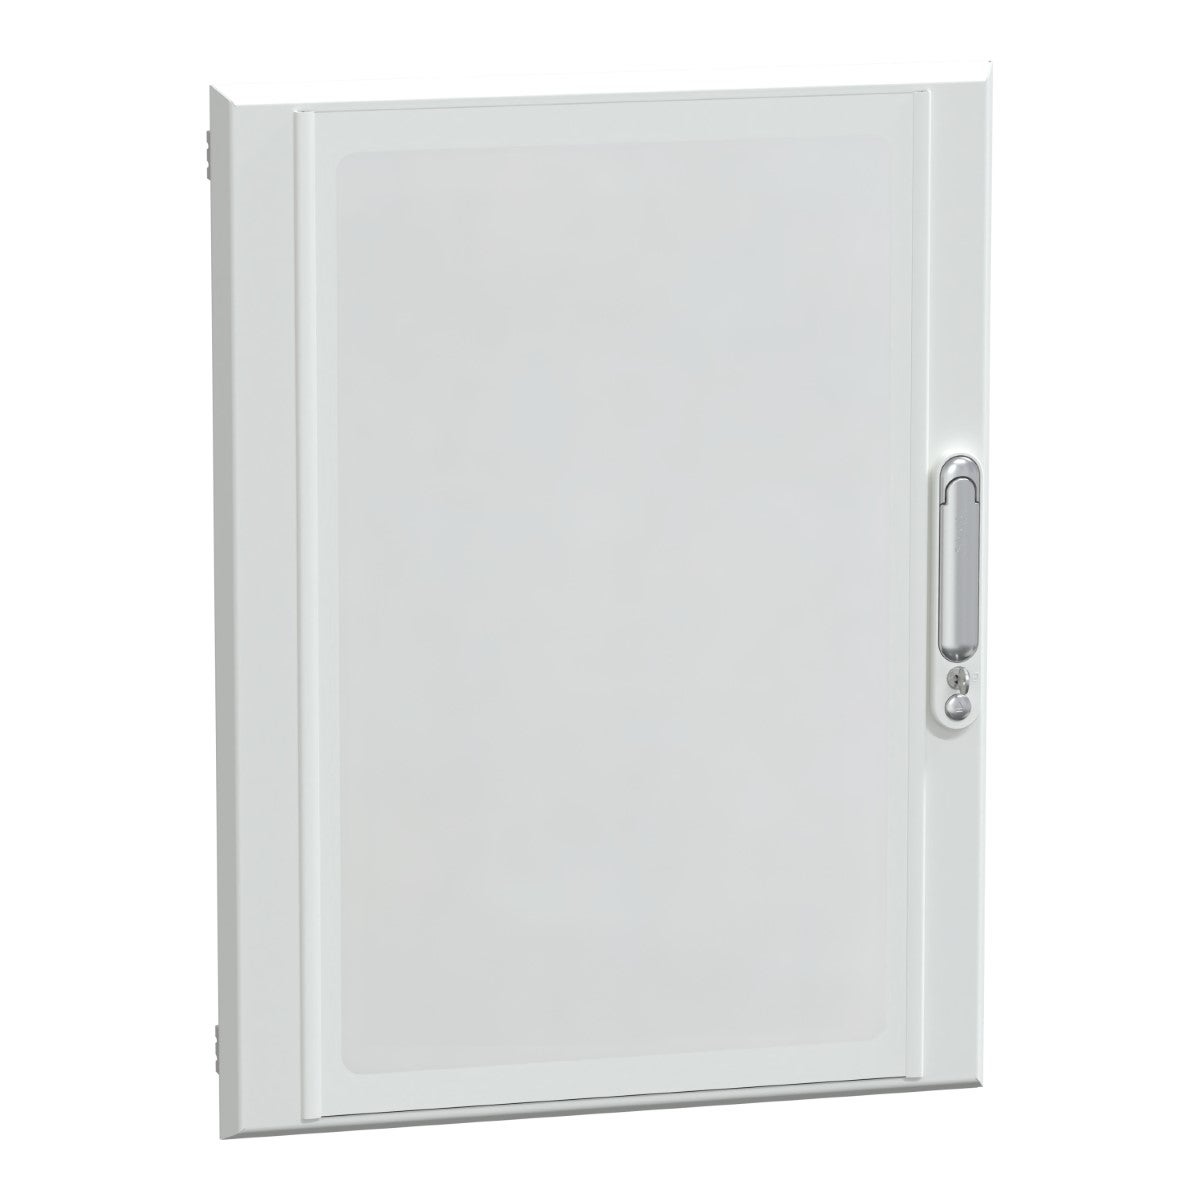 Door, PrismaSeT G, transparent type for enclosure, 15M, W600, IP30, white, RAL 9003